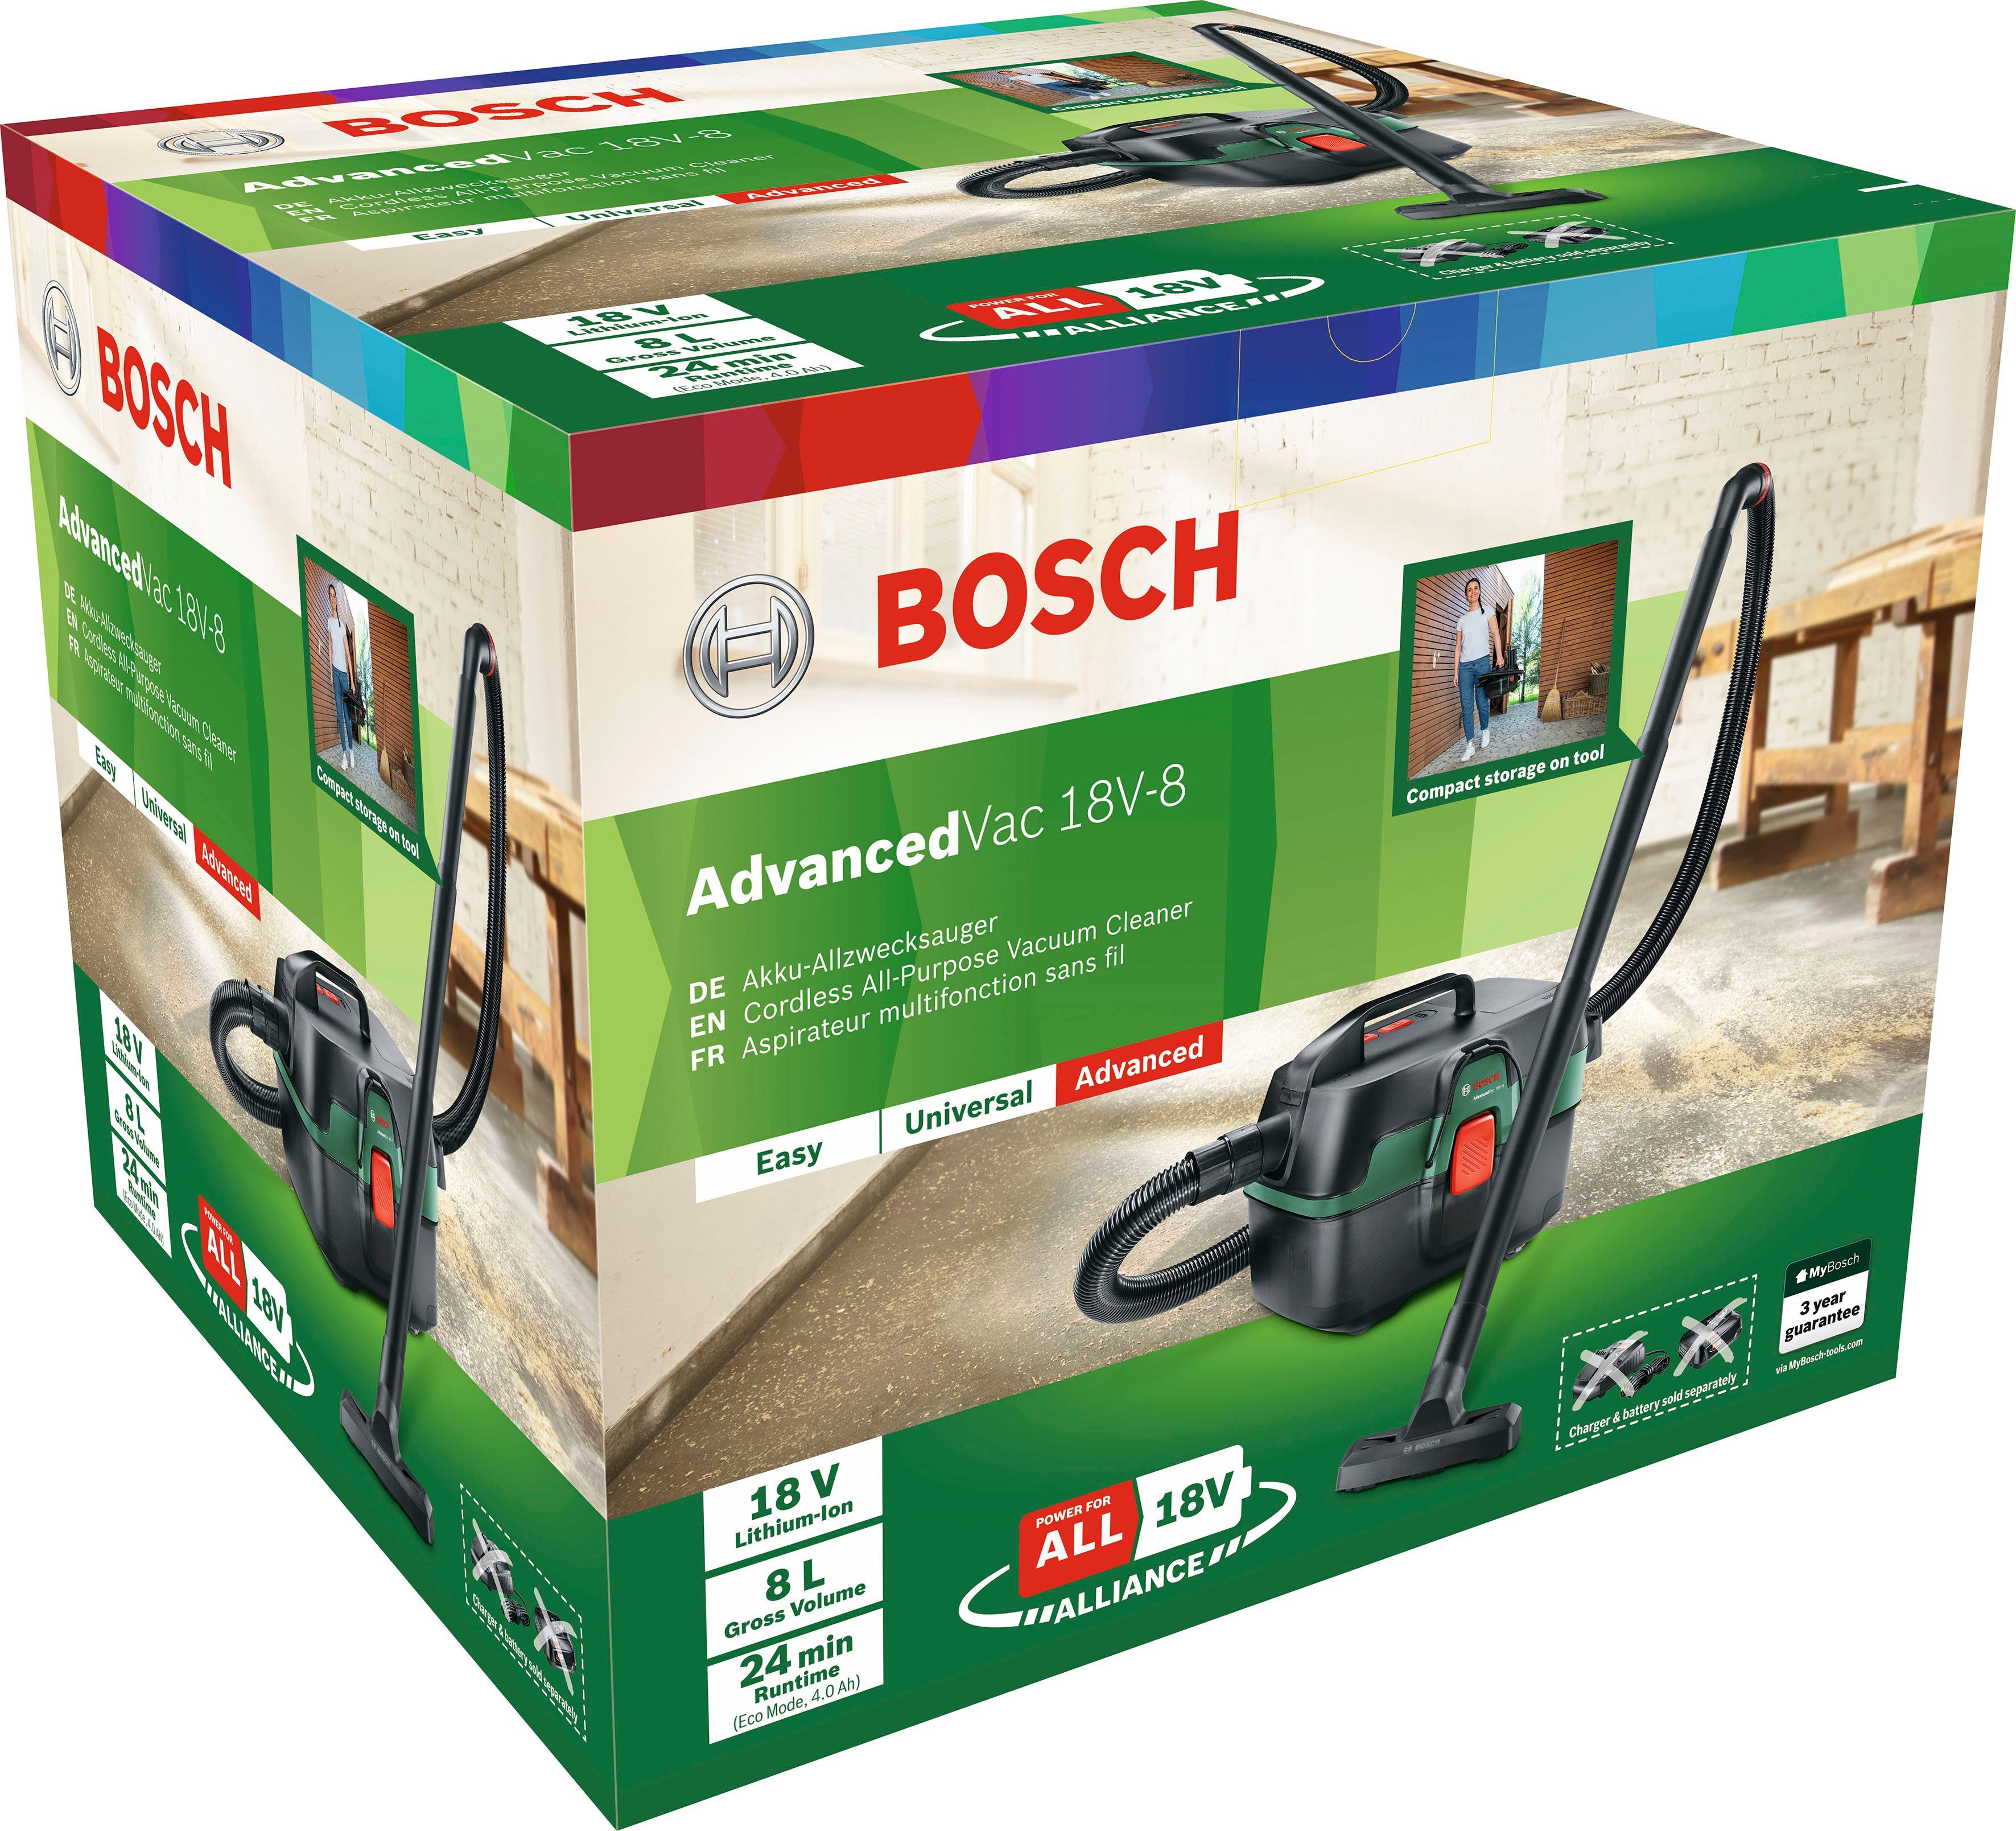 Bosch Home & 18V-8, Garden Akku Nass-Trocken-Akkusauger mit Beutel, Ladegerät AdvancedVac und ohne